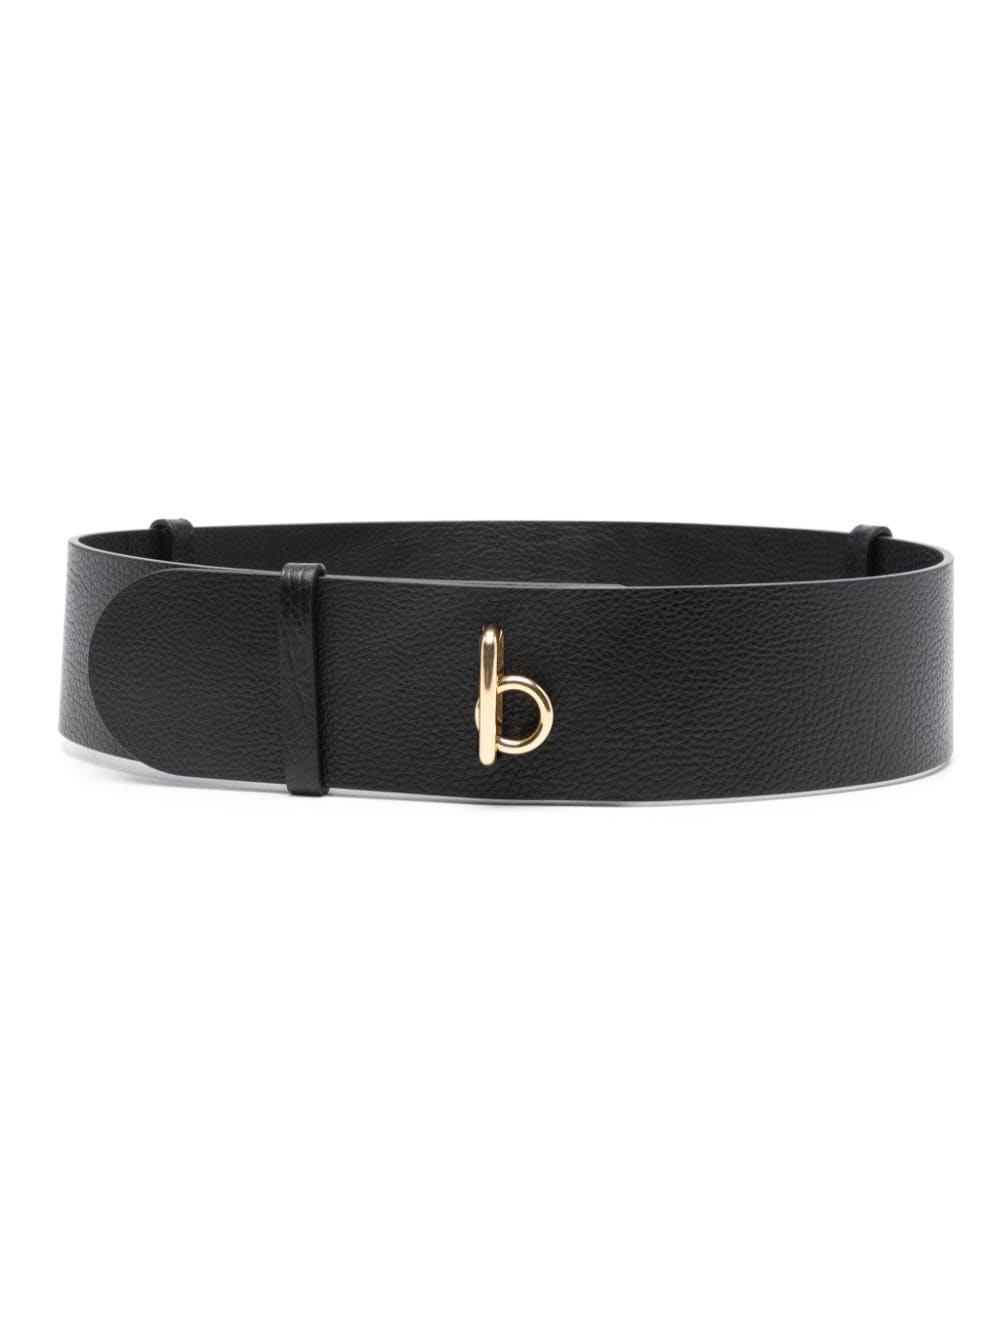 Burberry large leather belt - Black von Burberry